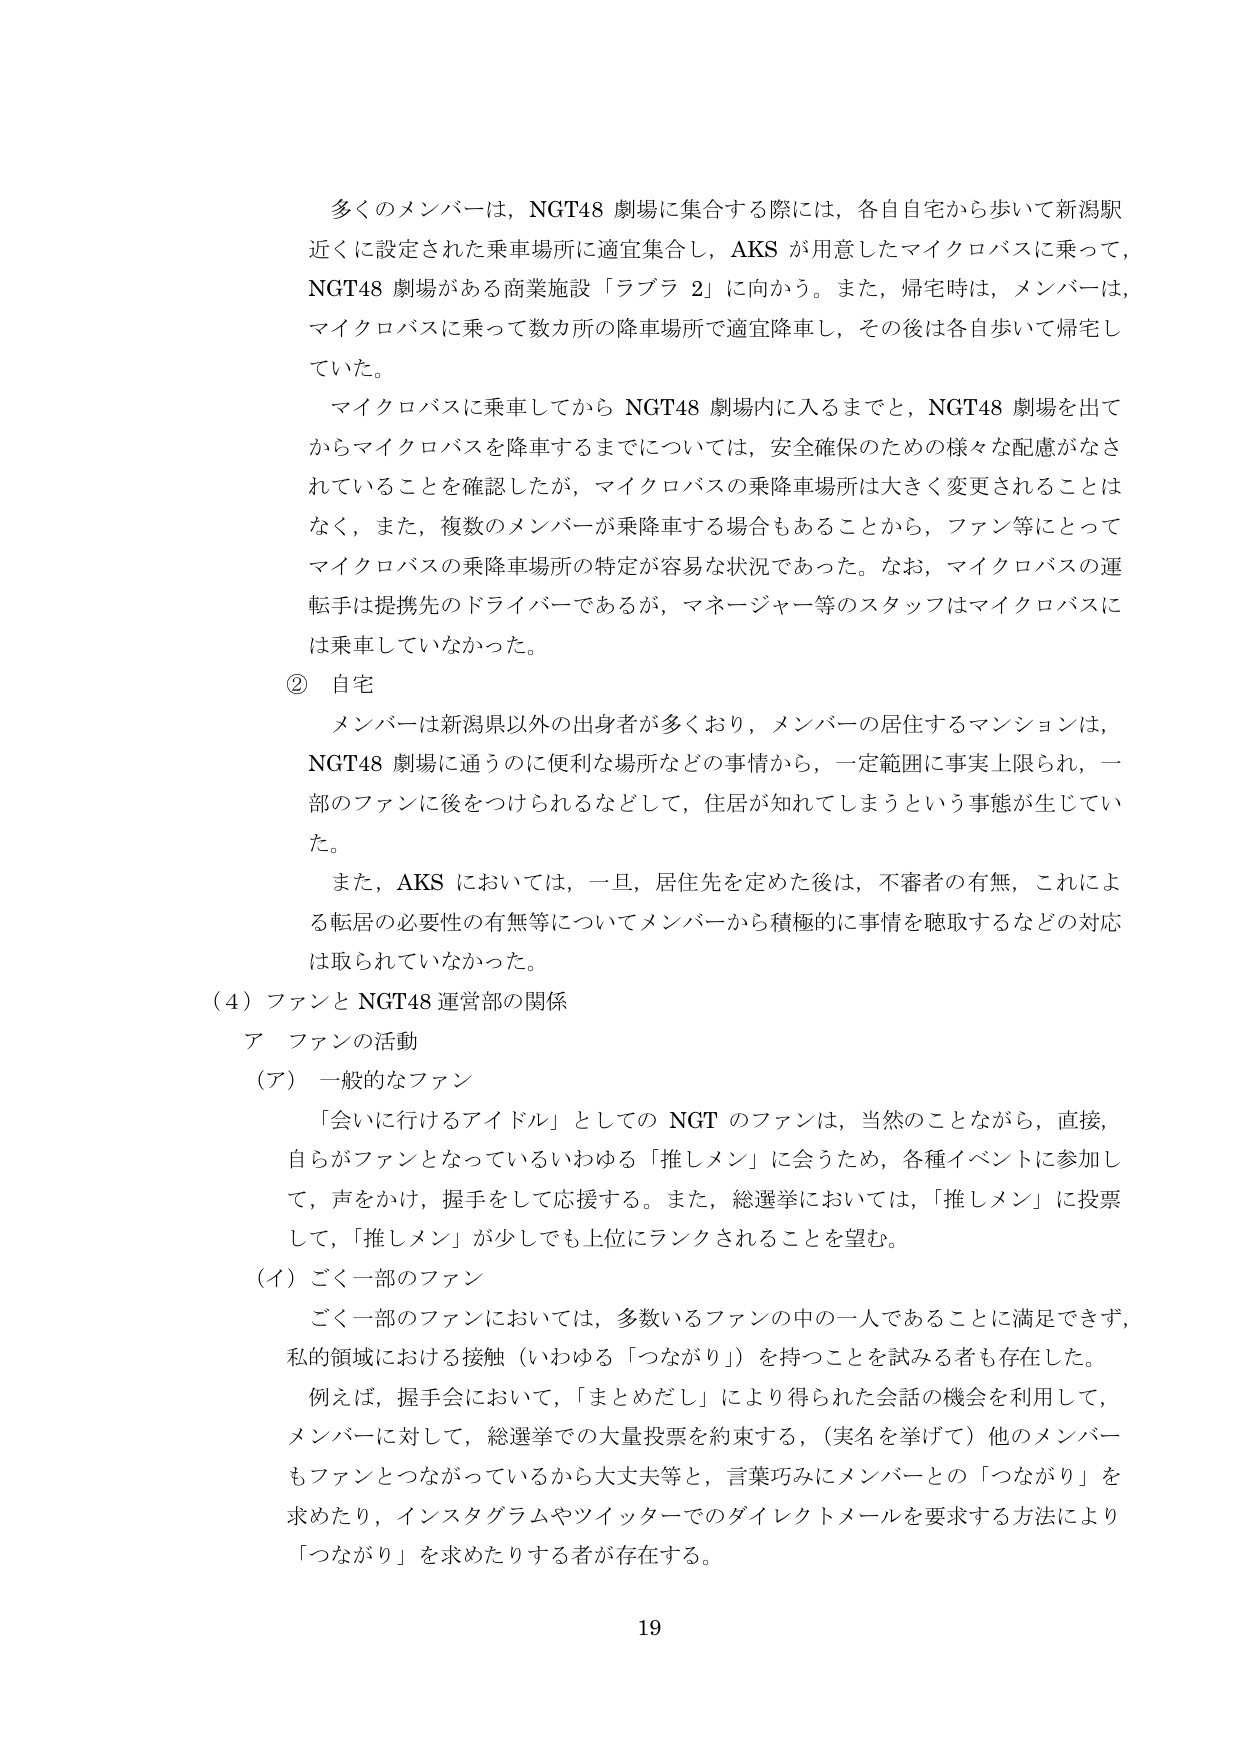 NGT48第三者委員会調査報告書21